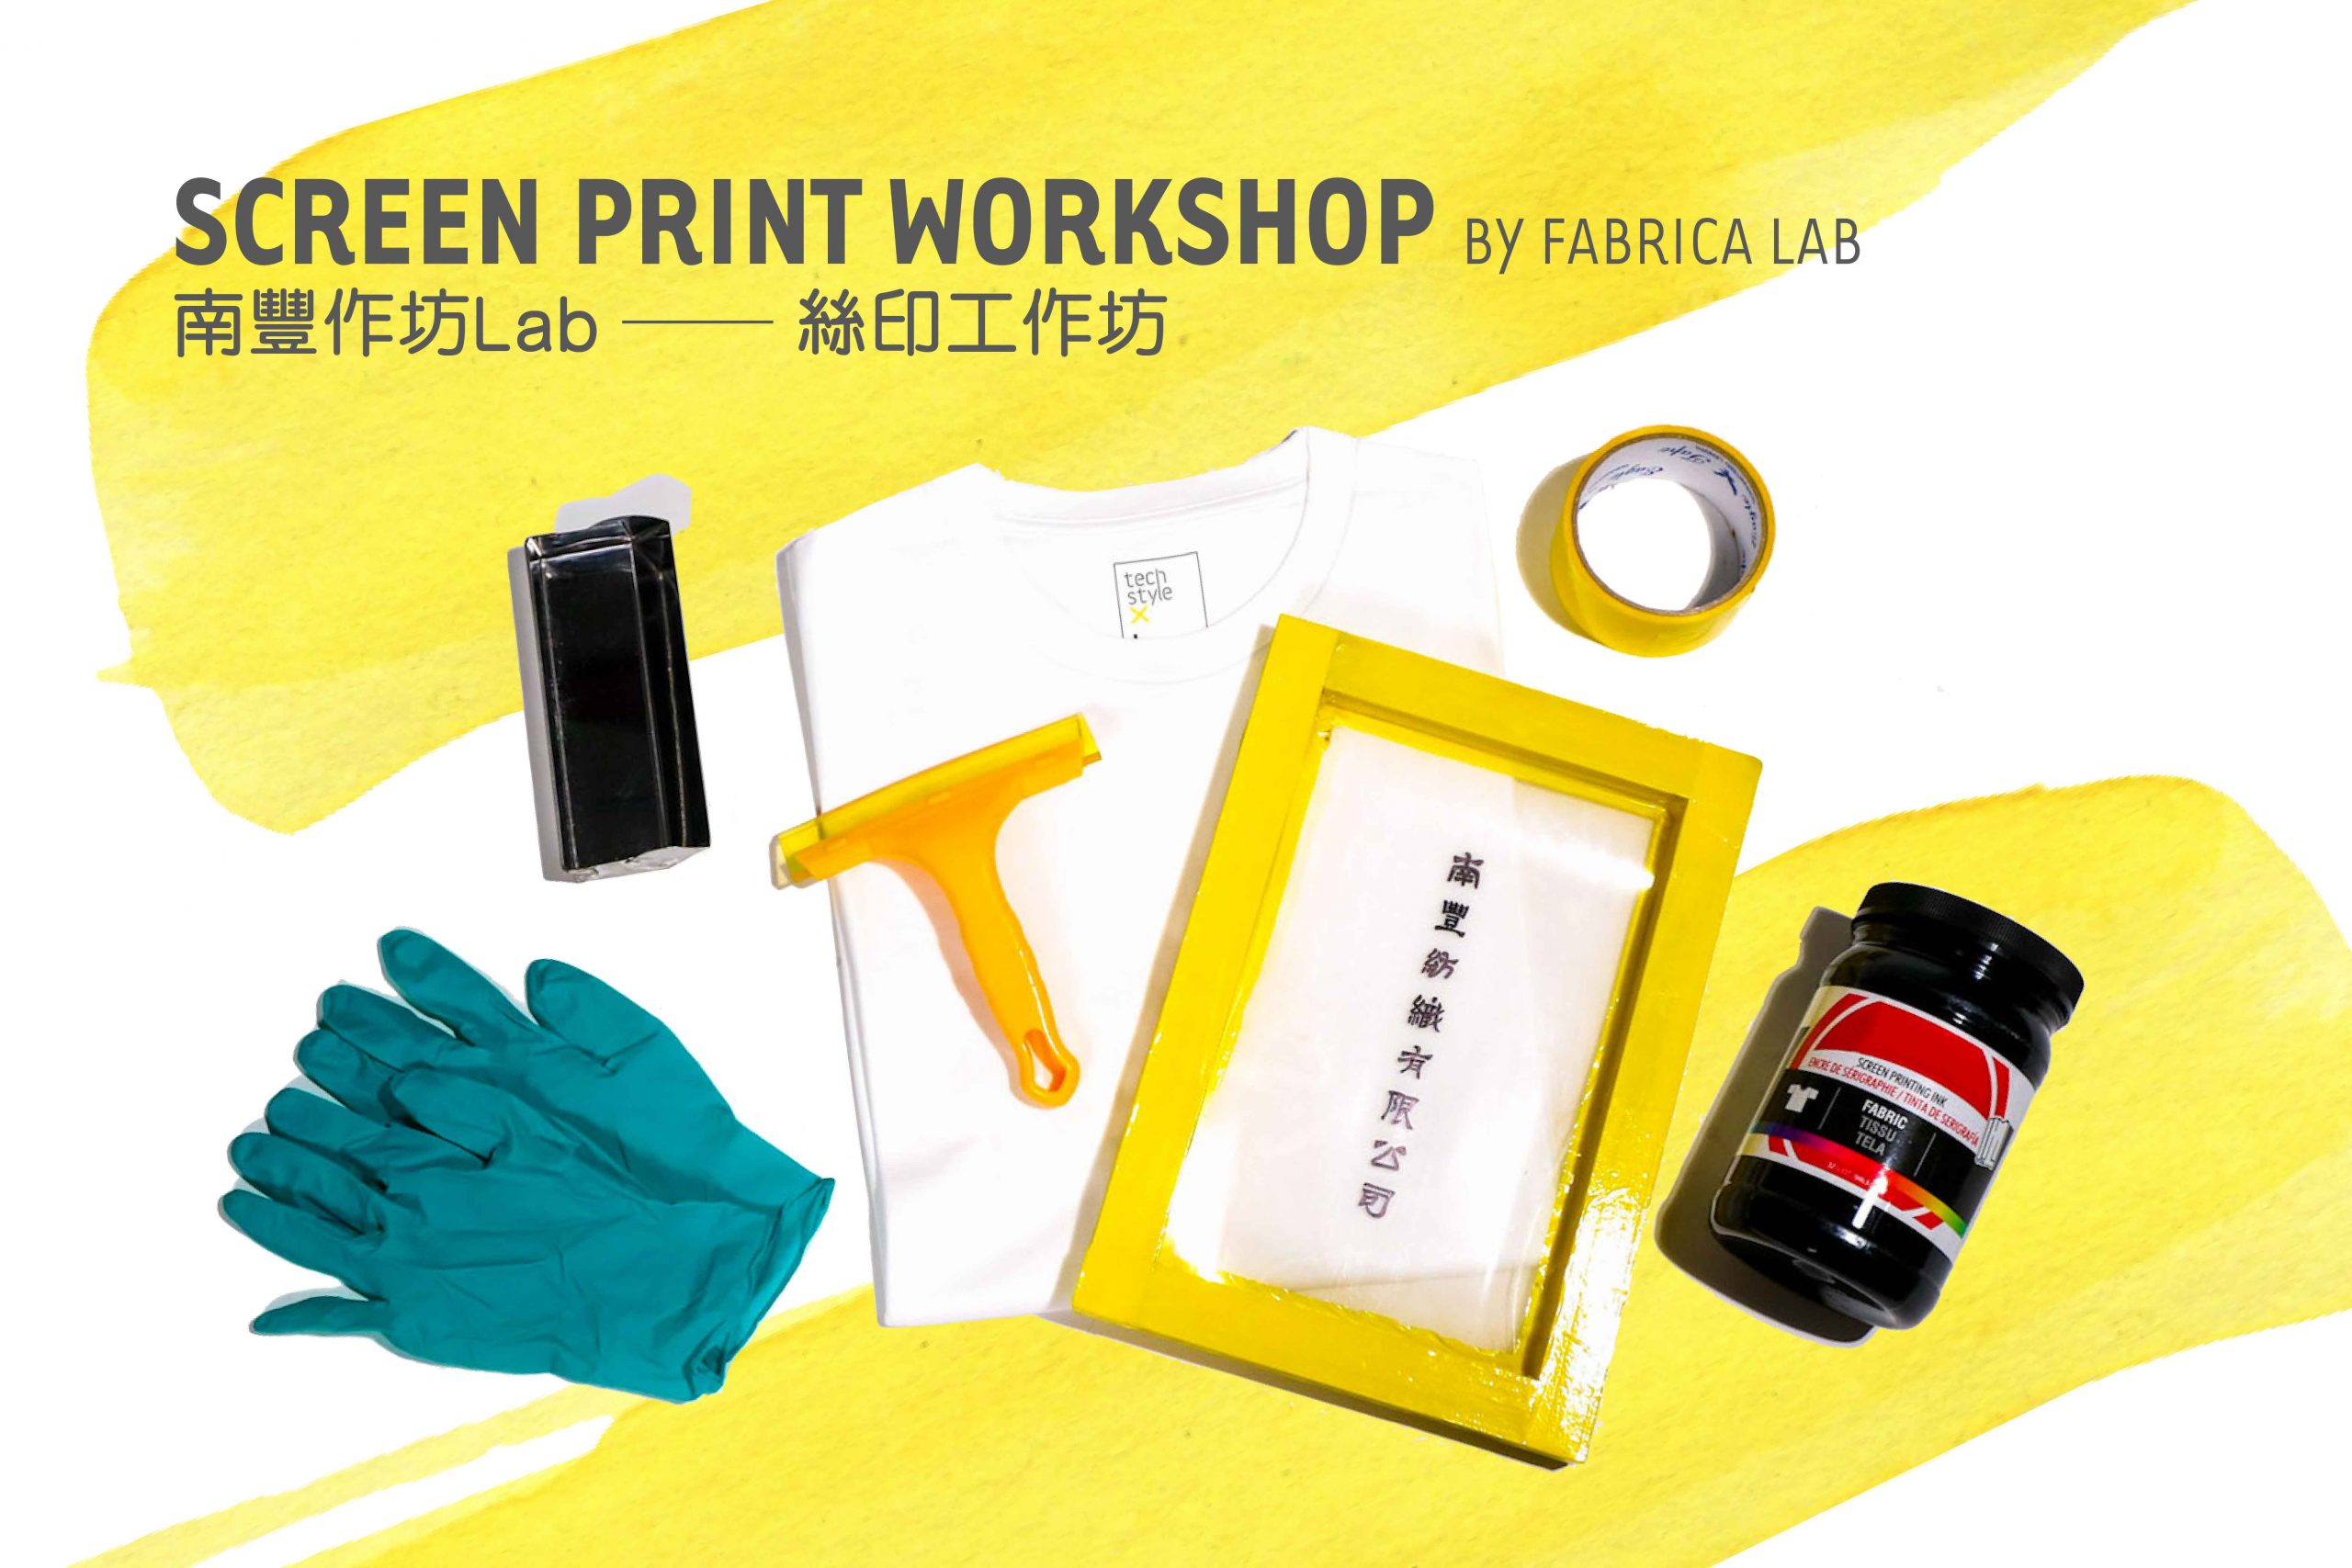 rive ned Ledig Nævne Screen Print Workshop - The Mills Fabrica